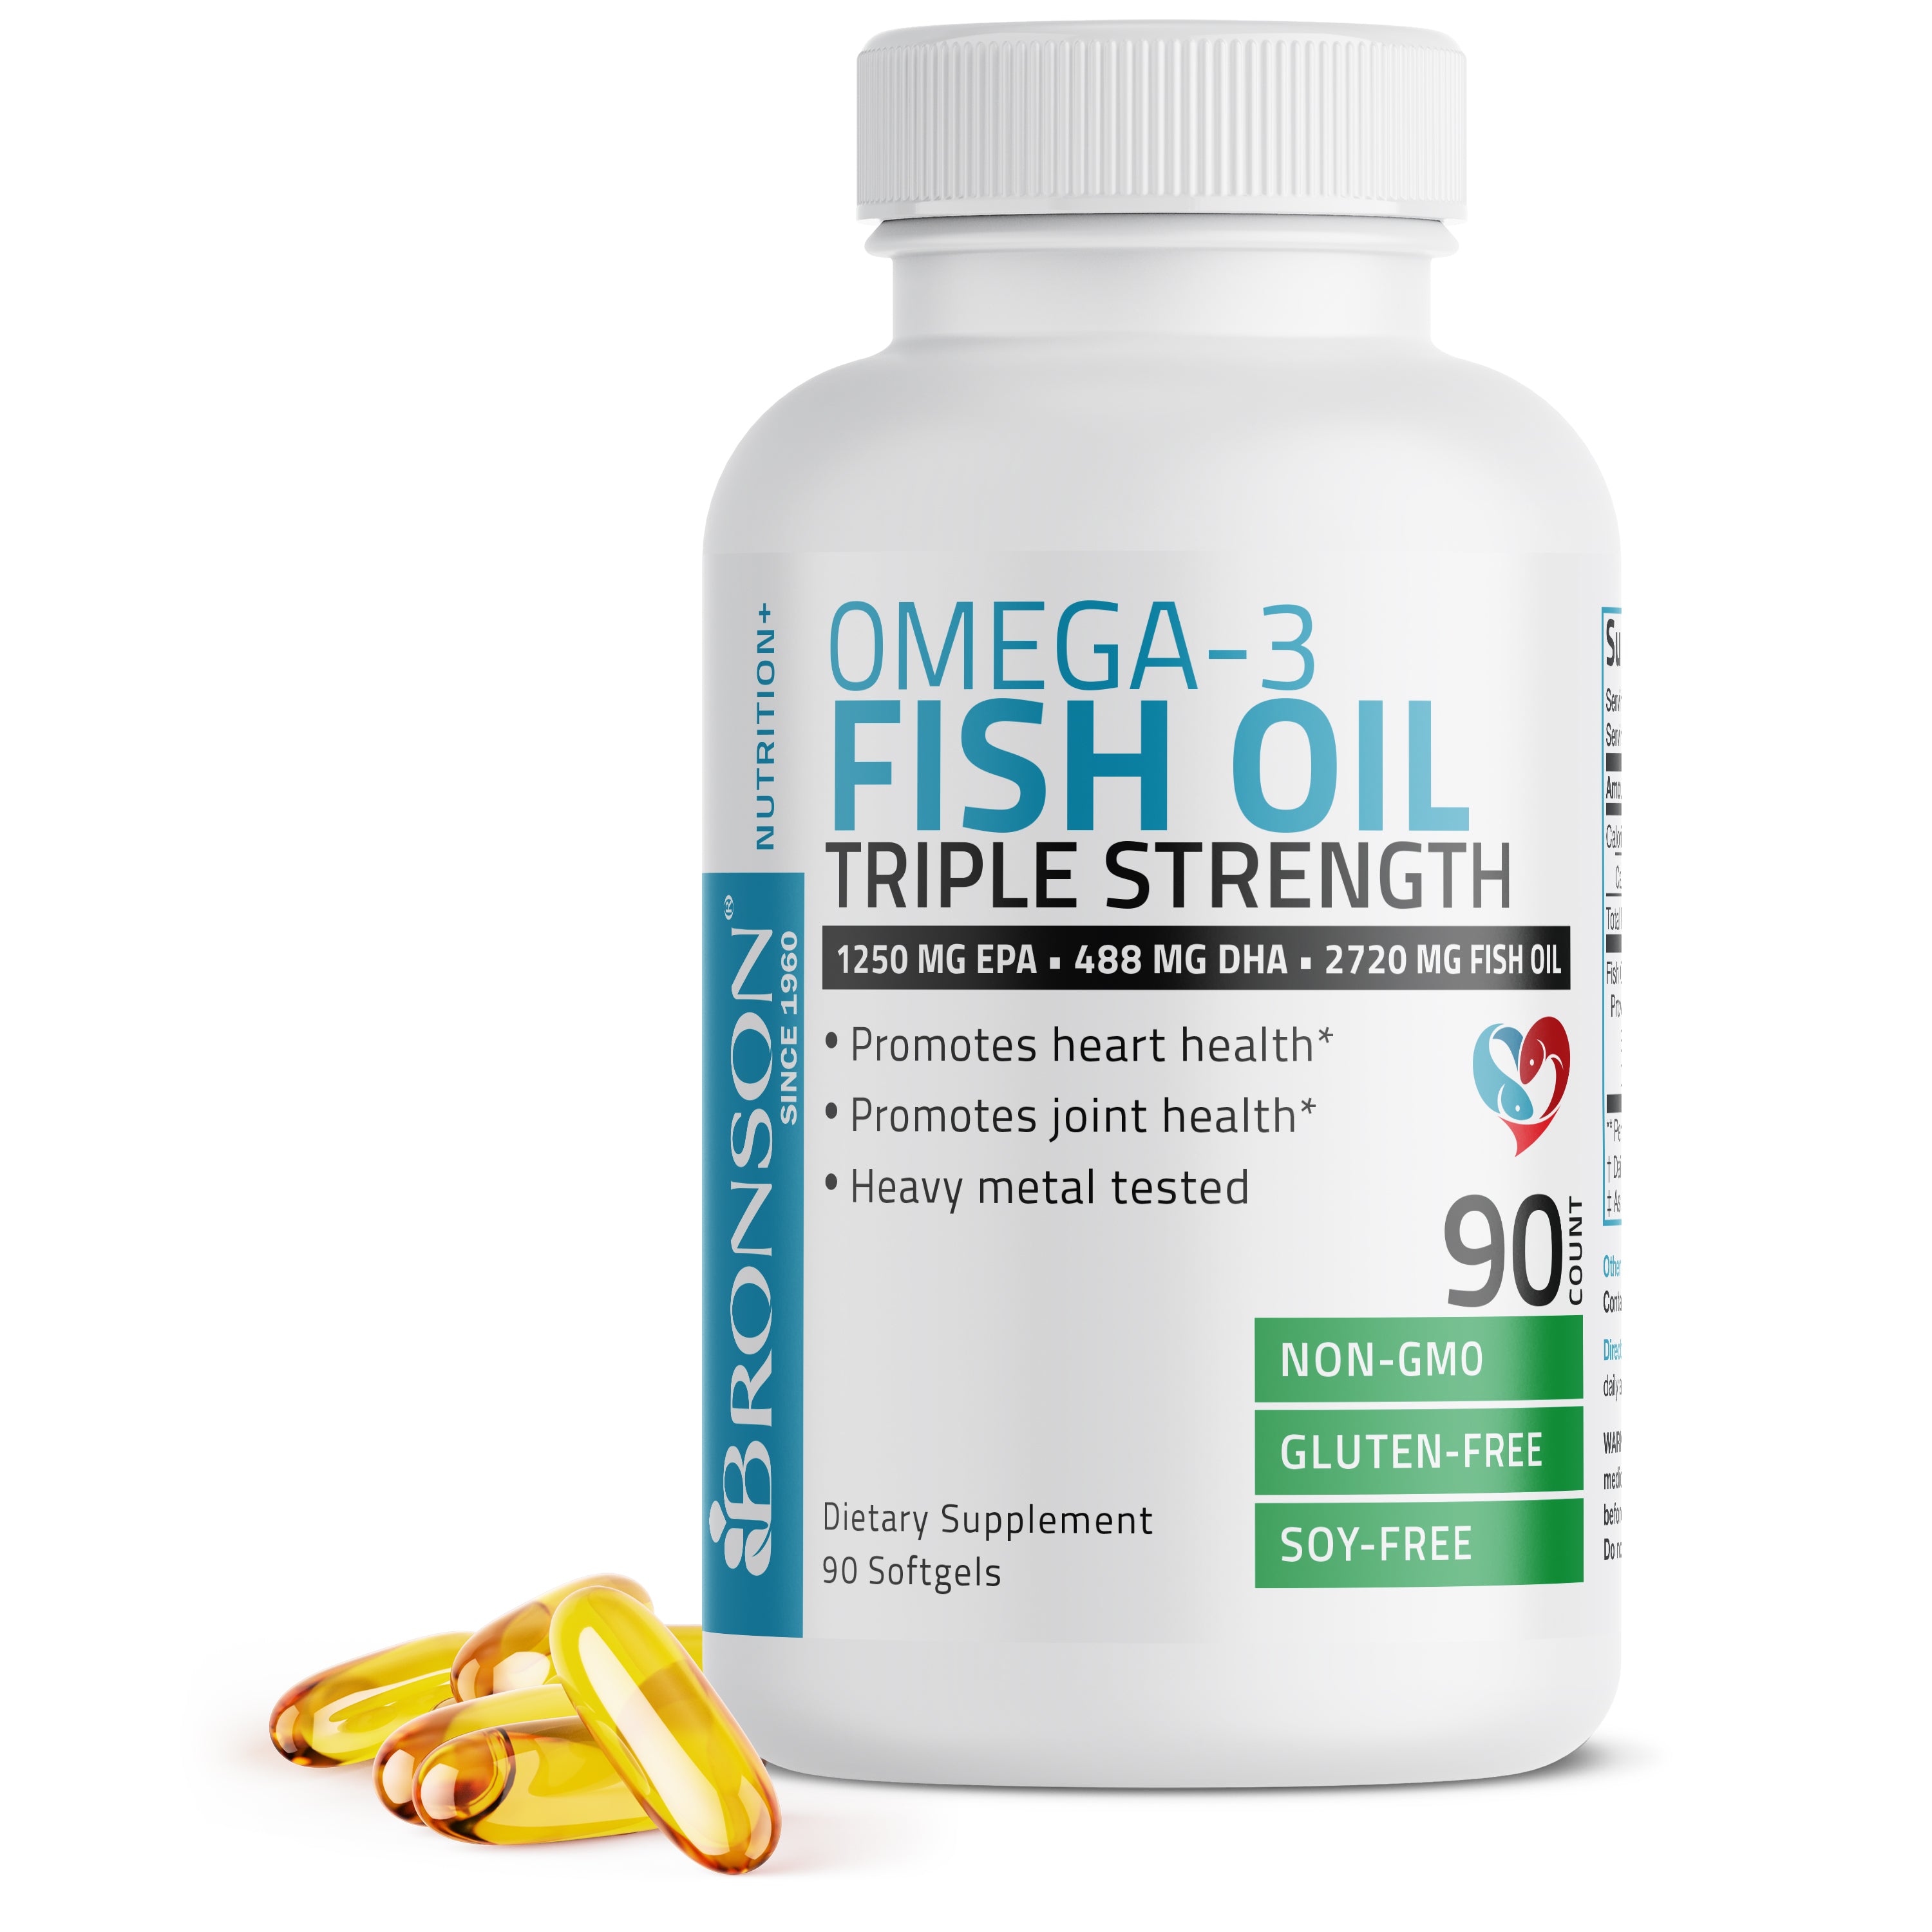 Omega-3 Fish Oil EPA DHA Triple Strength - 2,720 mg view 5 of 6